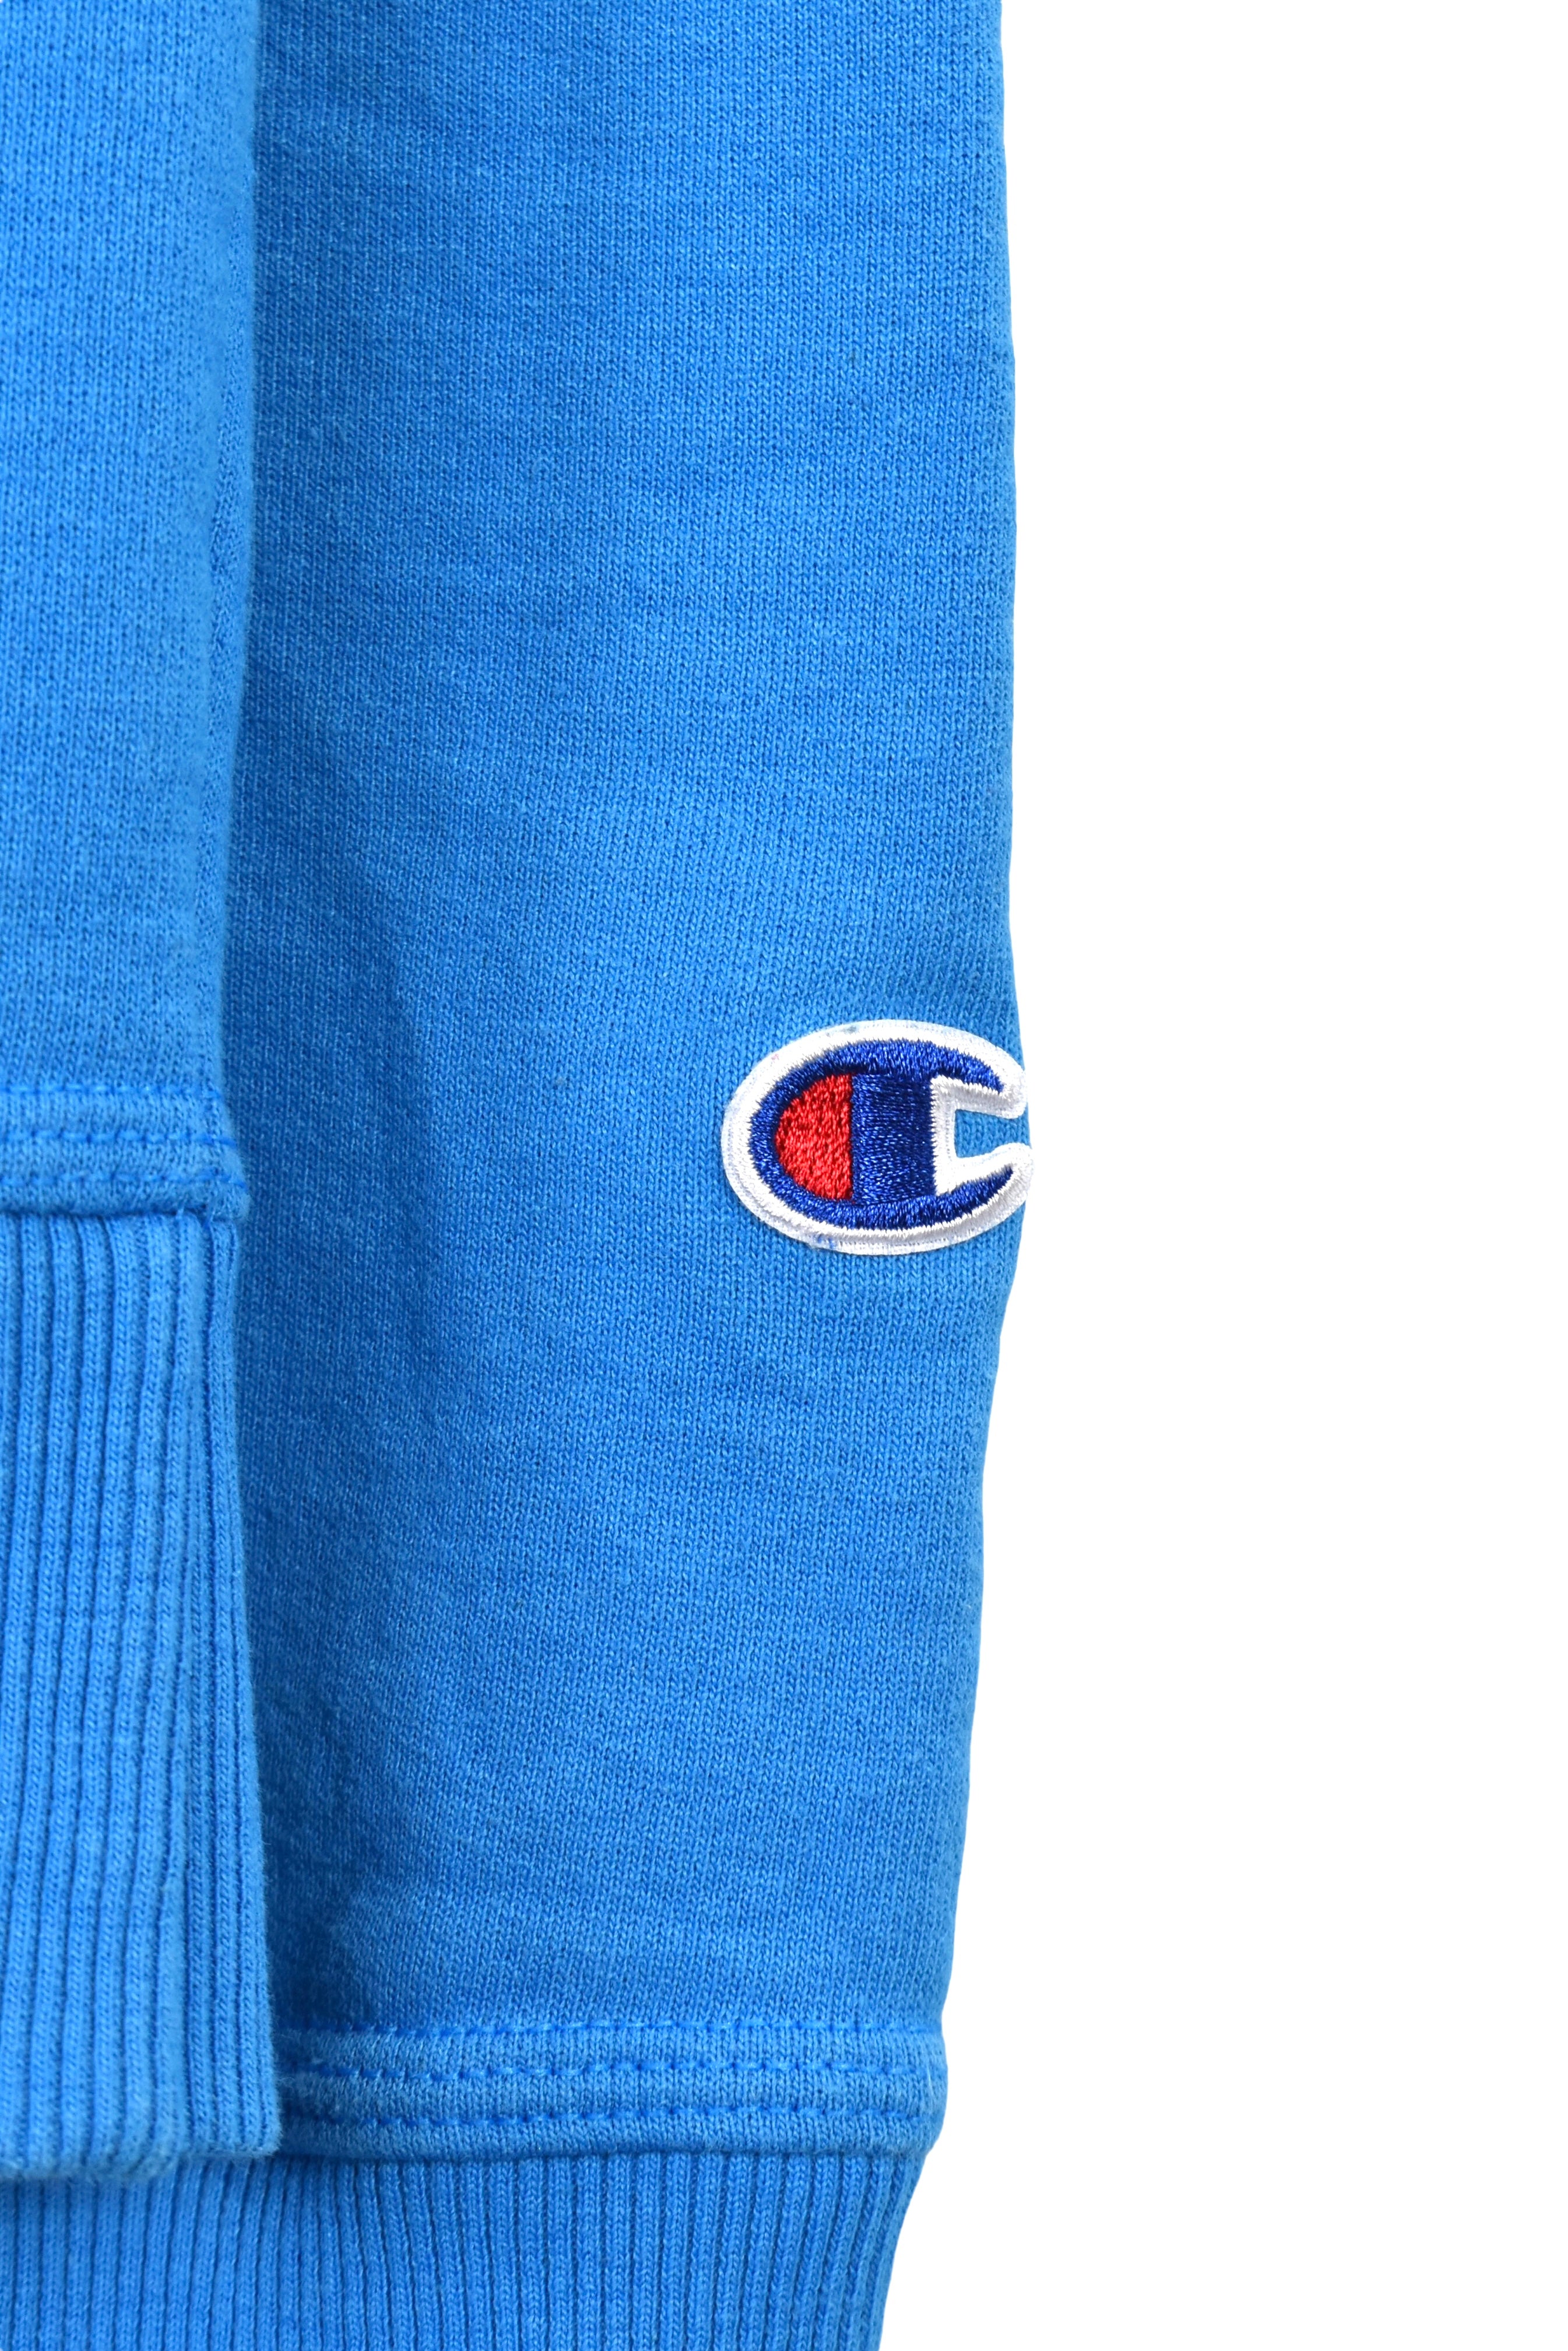 Modern Champion sweatshirt, blue embroidered crewneck - Small